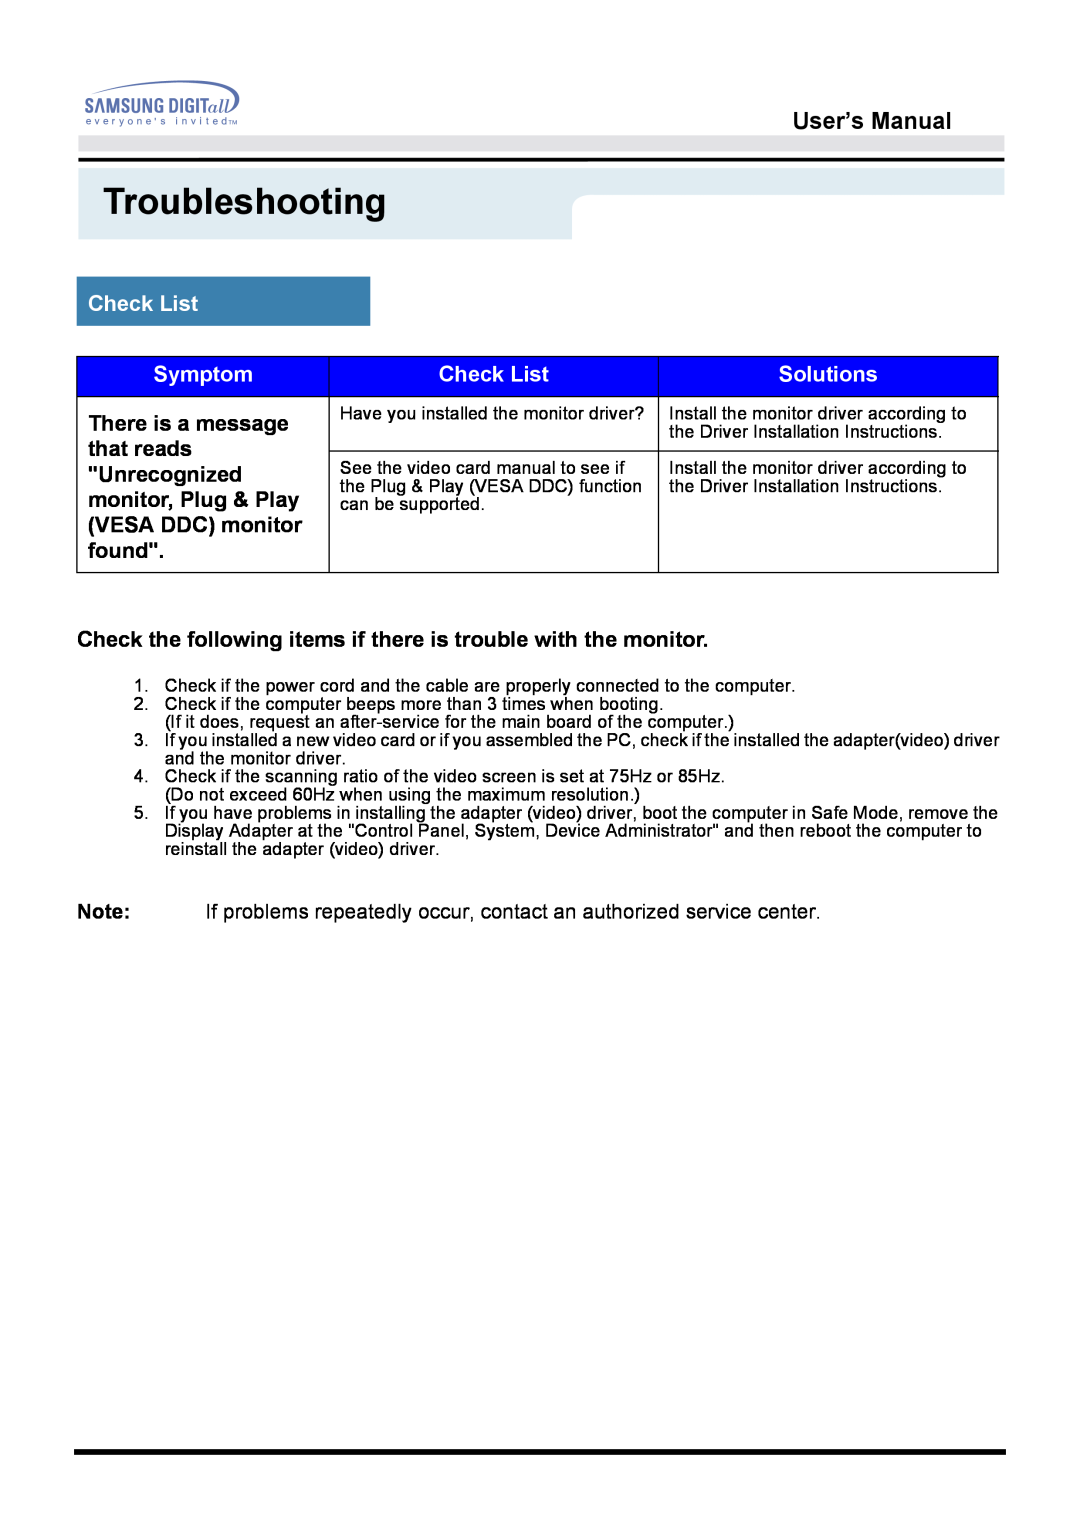 Samsung 151D user manual Troubleshooting, User’s Manual, Check List, Symptom, Solutions 